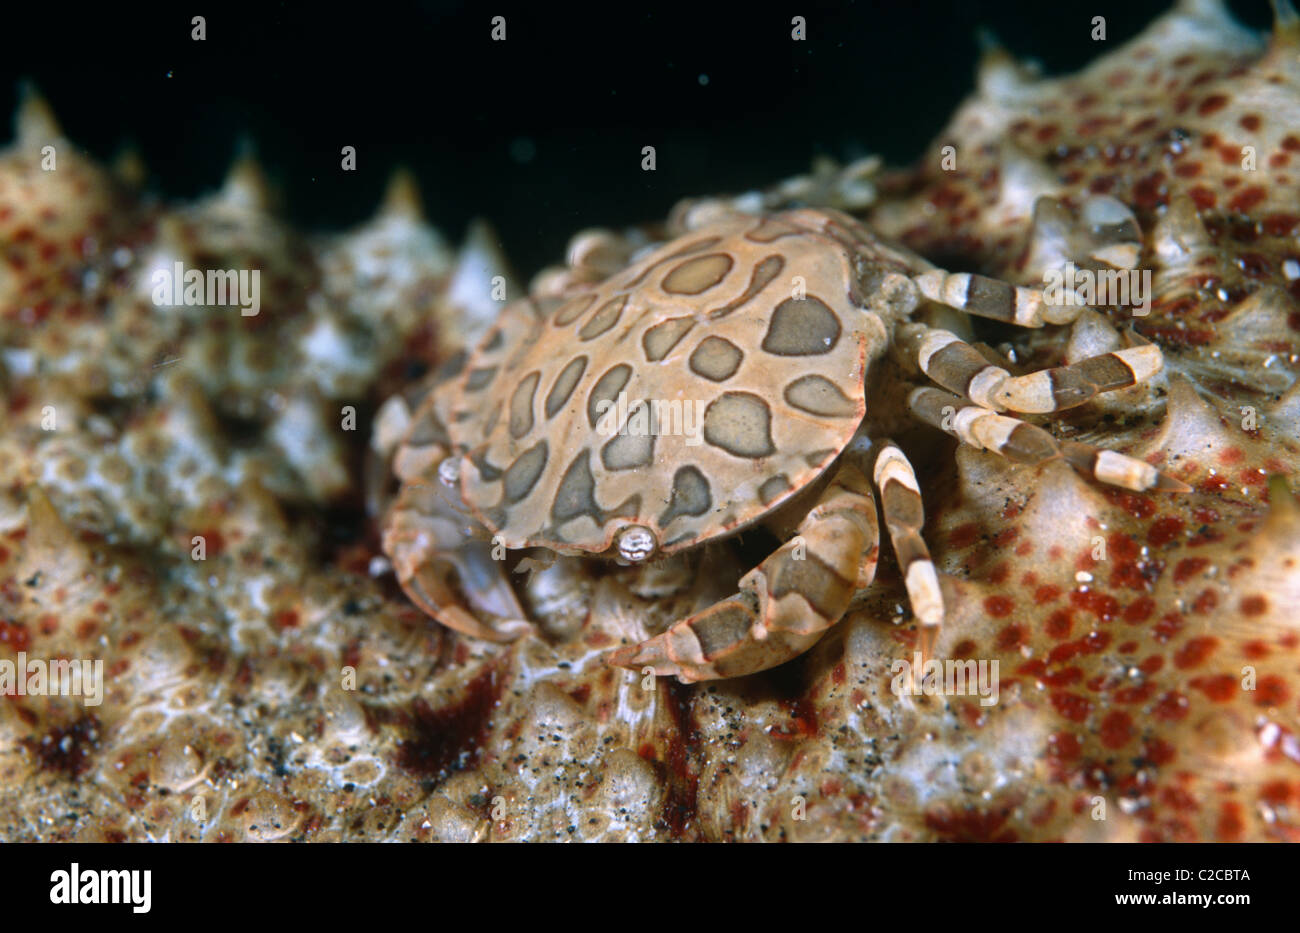 Harlequin Crab, Lissocarcinus orbicularis, on Amberfish Sea Cucumber, Thelenota anax, Lembeh Straits, Sulawesi, Indonesia, Asia Stock Photo